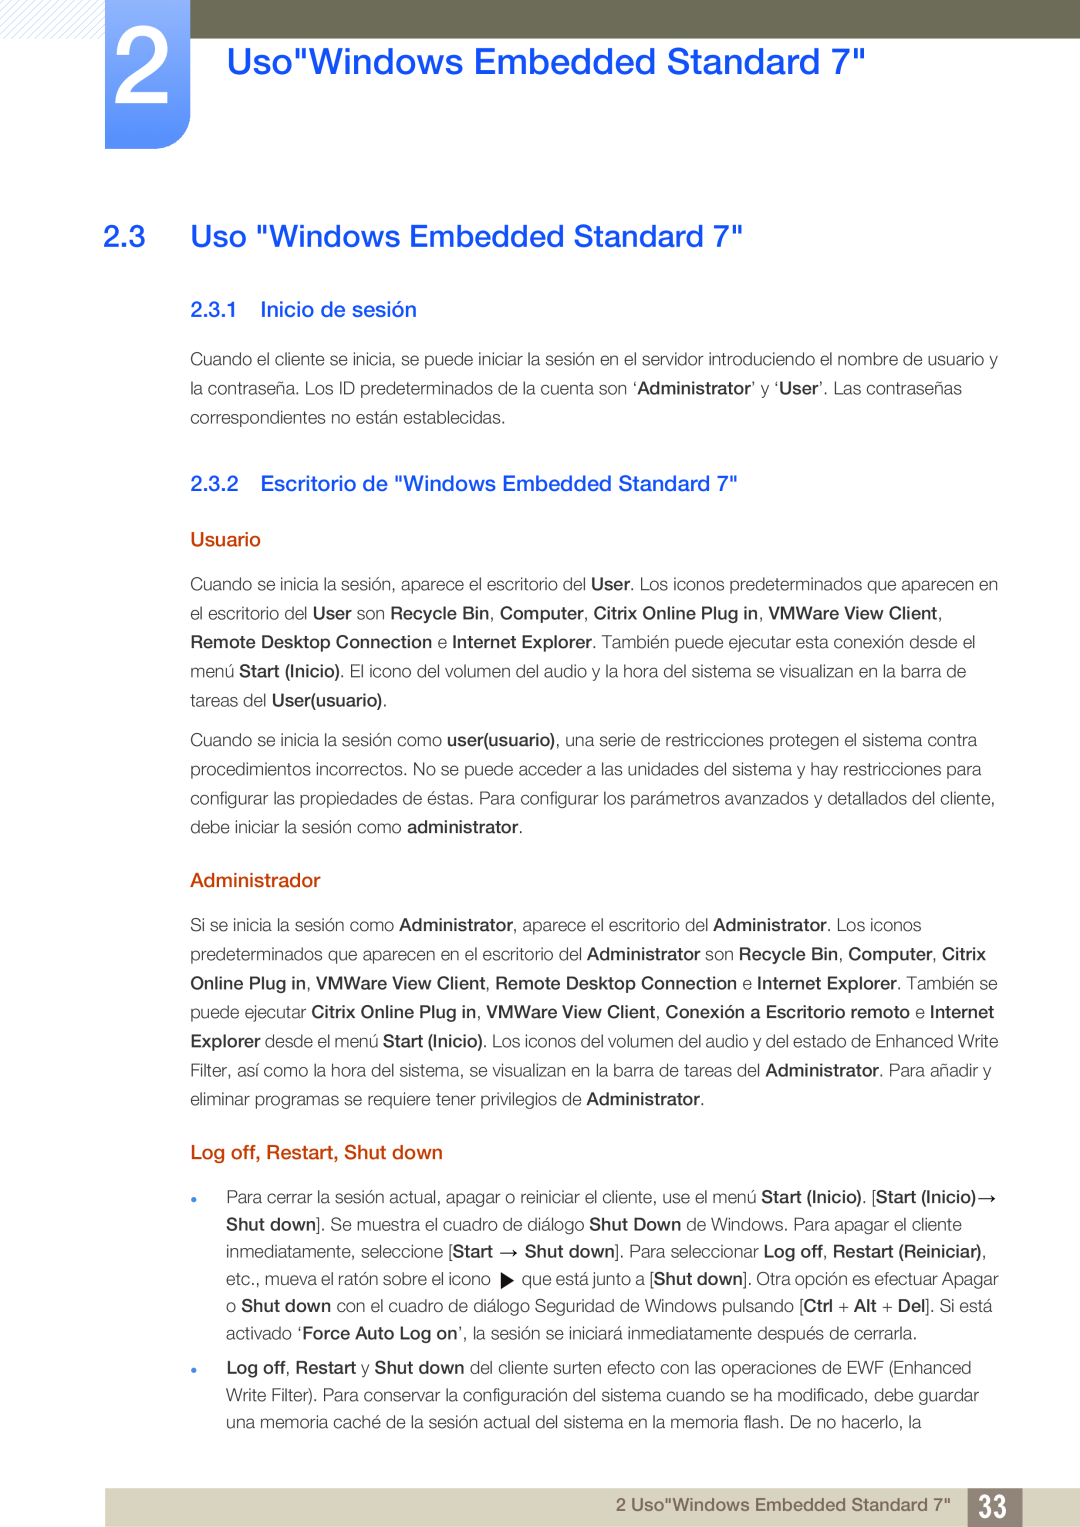 Samsung LF24TSWTBDN/EN Uso Windows Embedded Standard, Inicio de sesión, Escritorio de Windows Embedded Standard, Usuario 